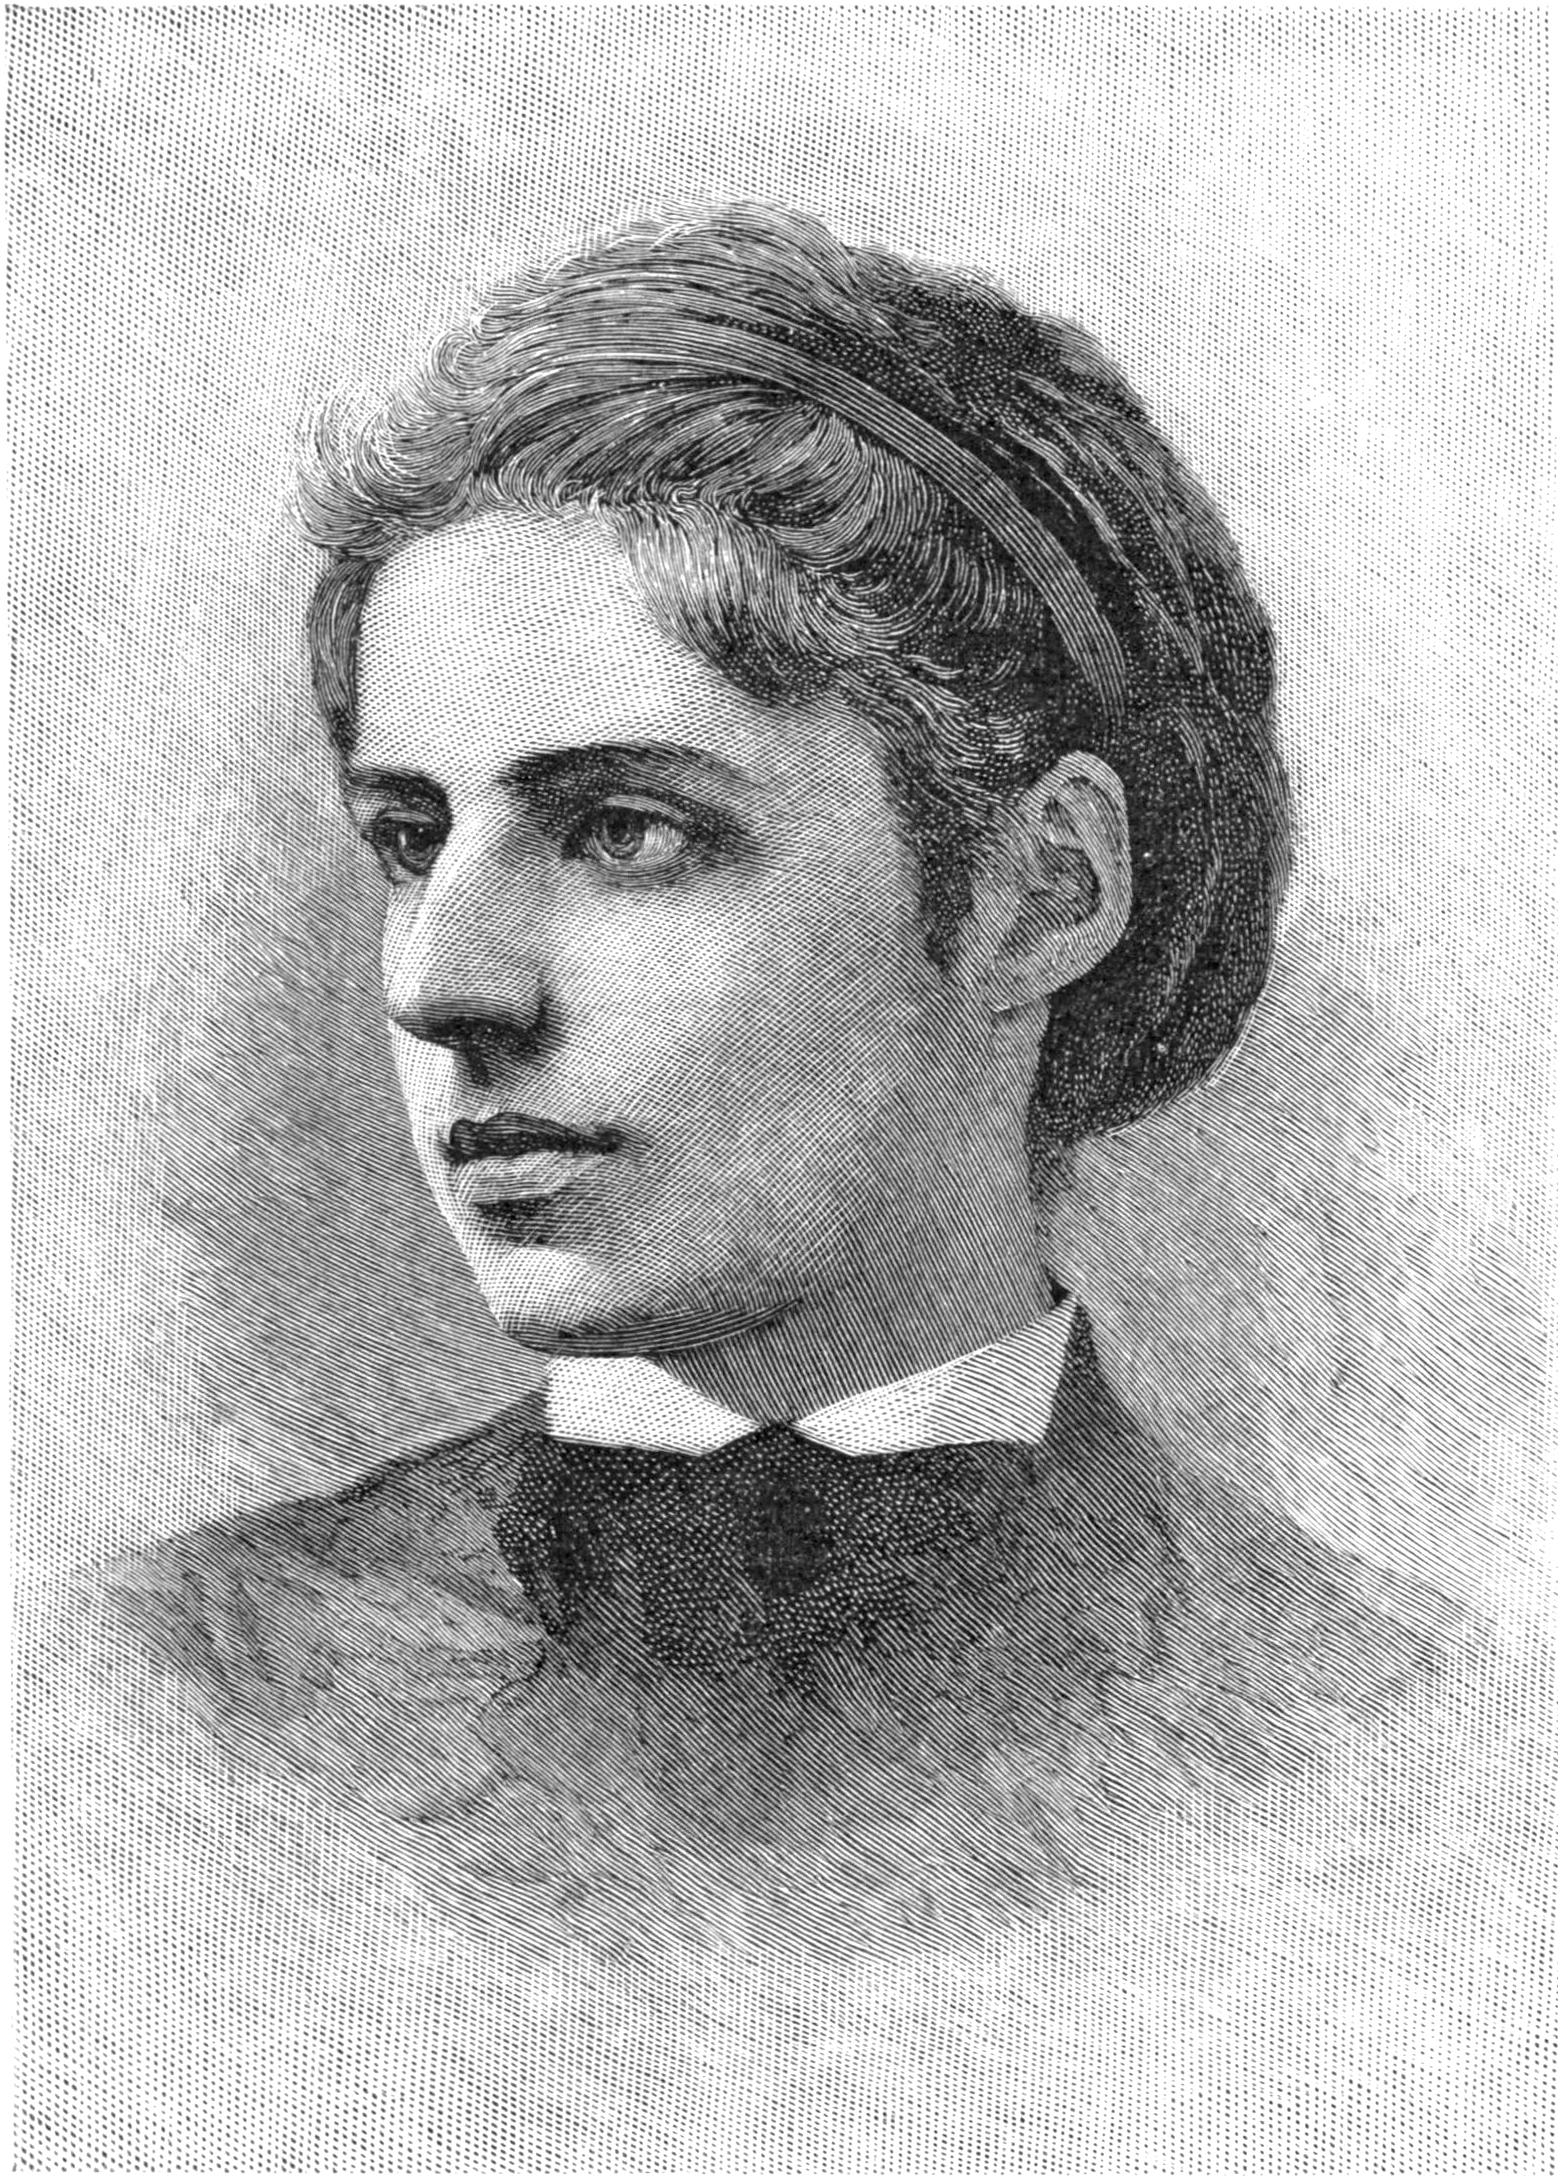 Emma Lazarus, 1849-1887